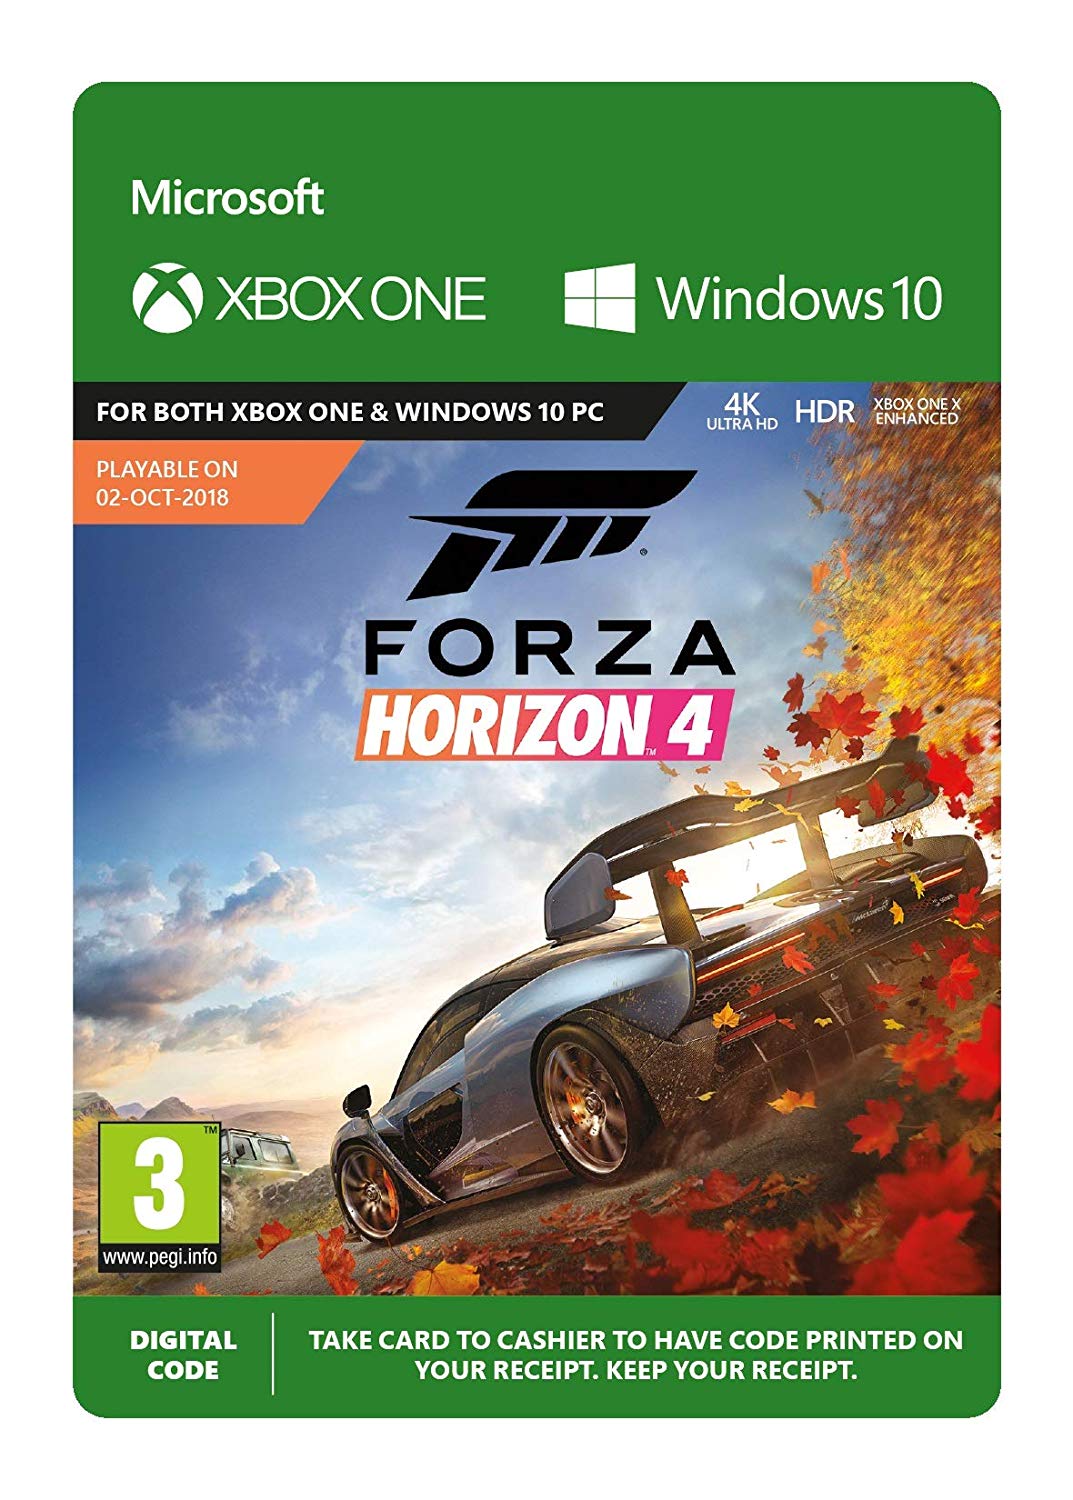 Download Xbox Forza Horizon 5 Car Pass Xbox One Digital Code